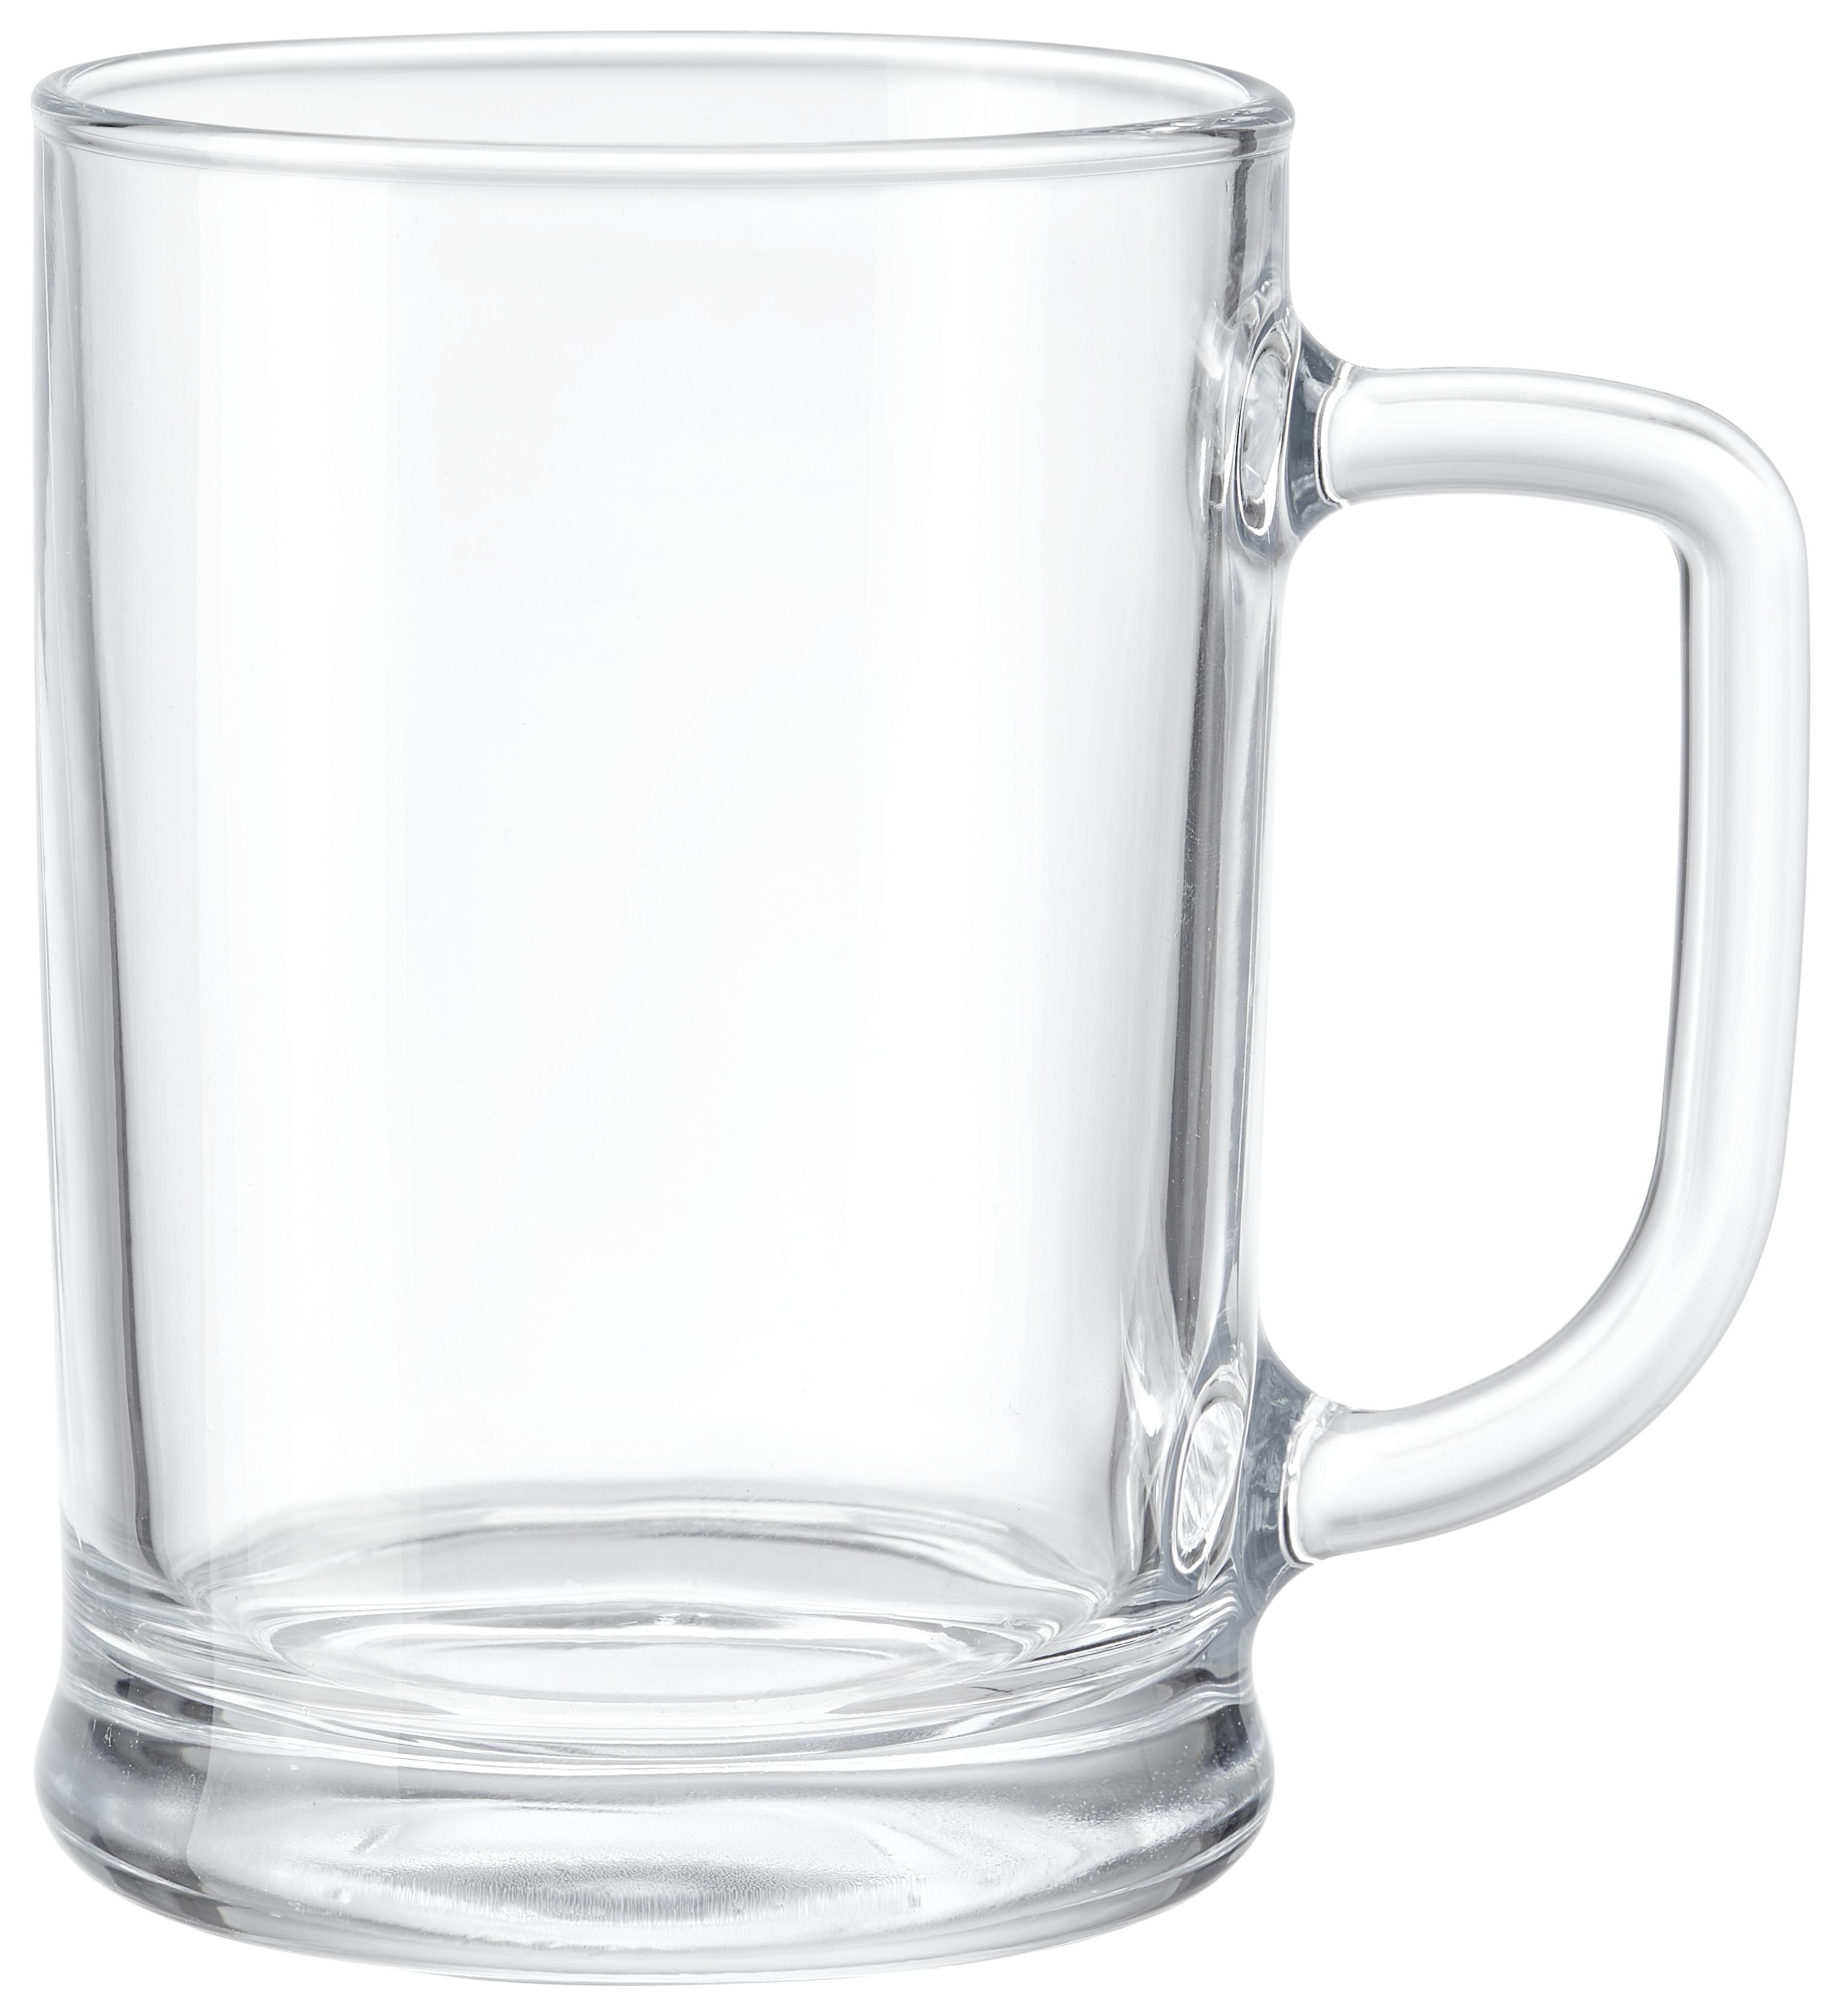 Bierkrug Franz aus Glas ca. 500ml - Klar, Glas (13,3/13,4/9,4cm)